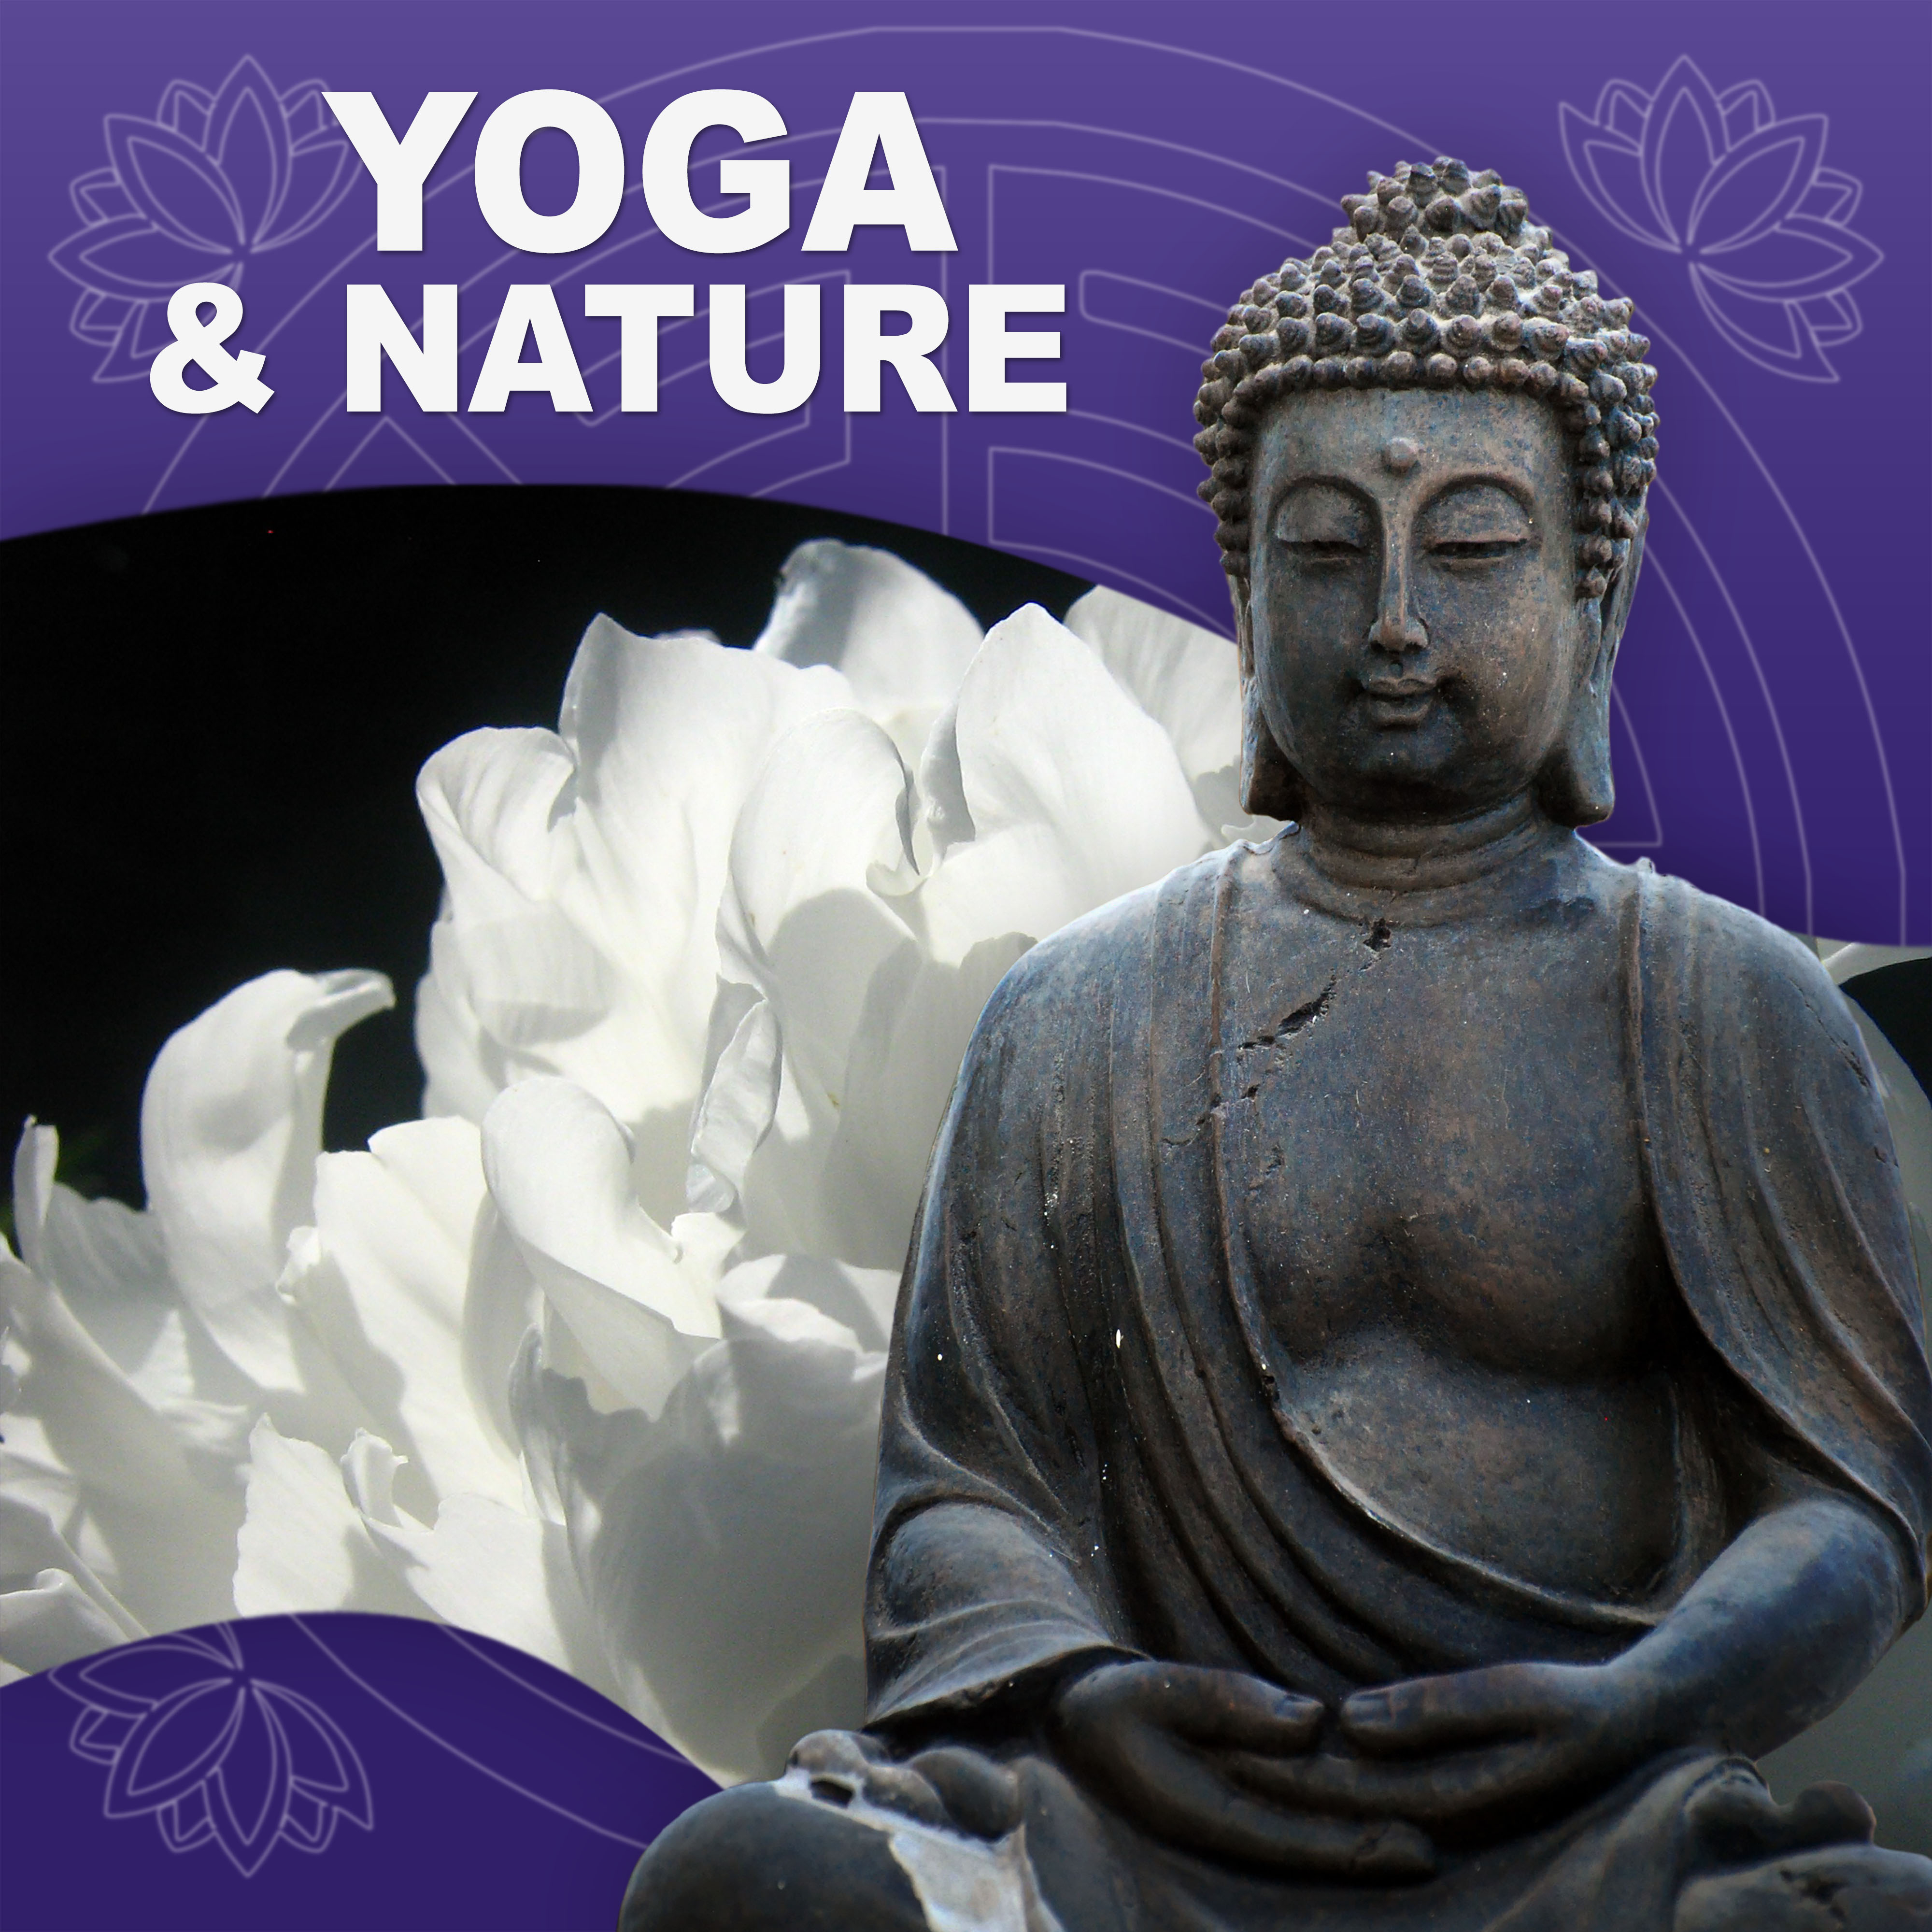 Yoga & Nature – Nature Sounds for Yoga Meditation, Mantra, Kundalini Yoga, Asian Zen Spa, Reiki, Yoga Healing, Relaxation Meditation, Nature Sounds